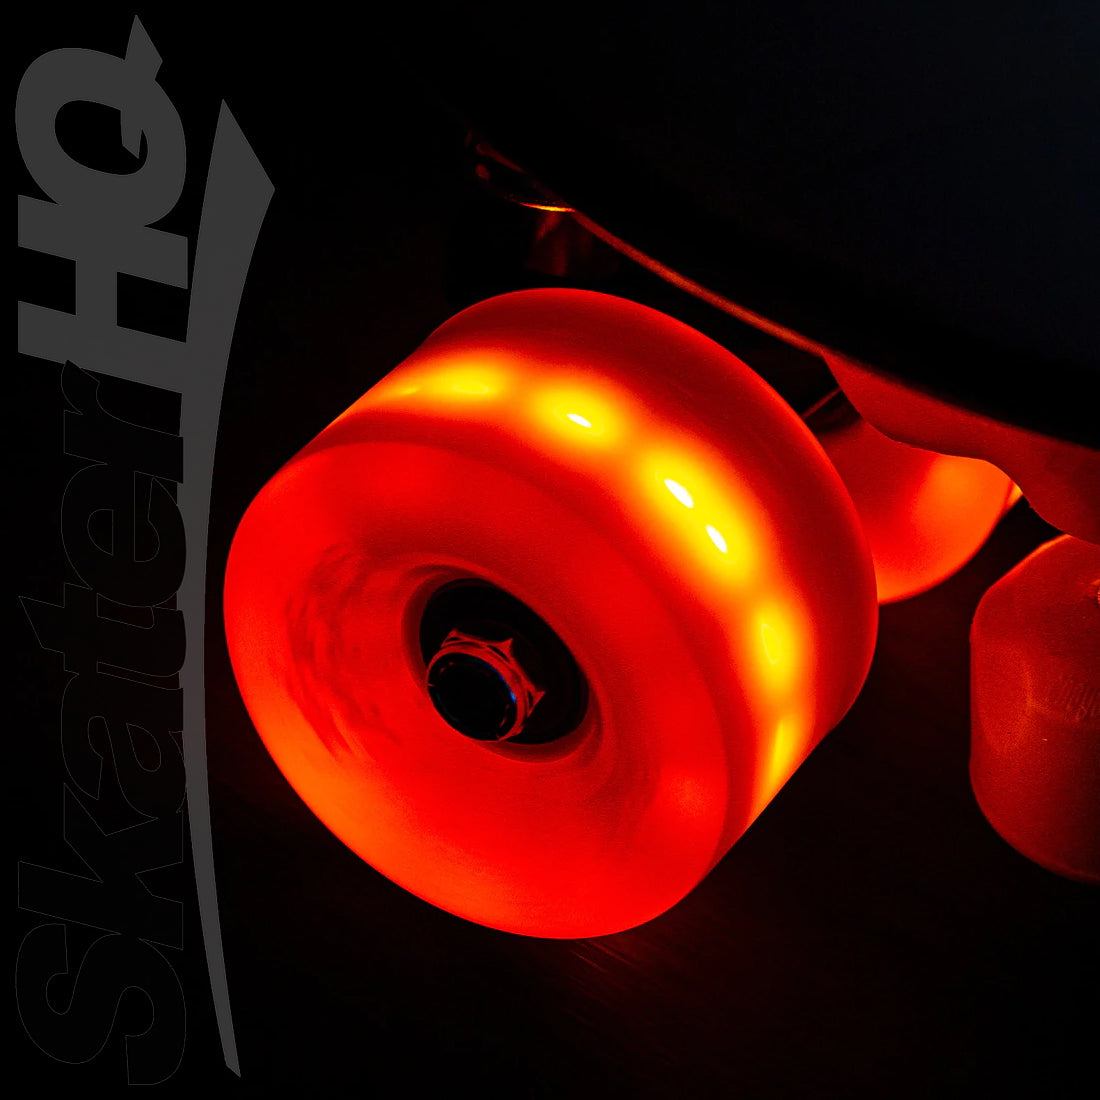 Chaya Neons LED 65mm 78a 4pk - Neon Red Roller Skate Wheels